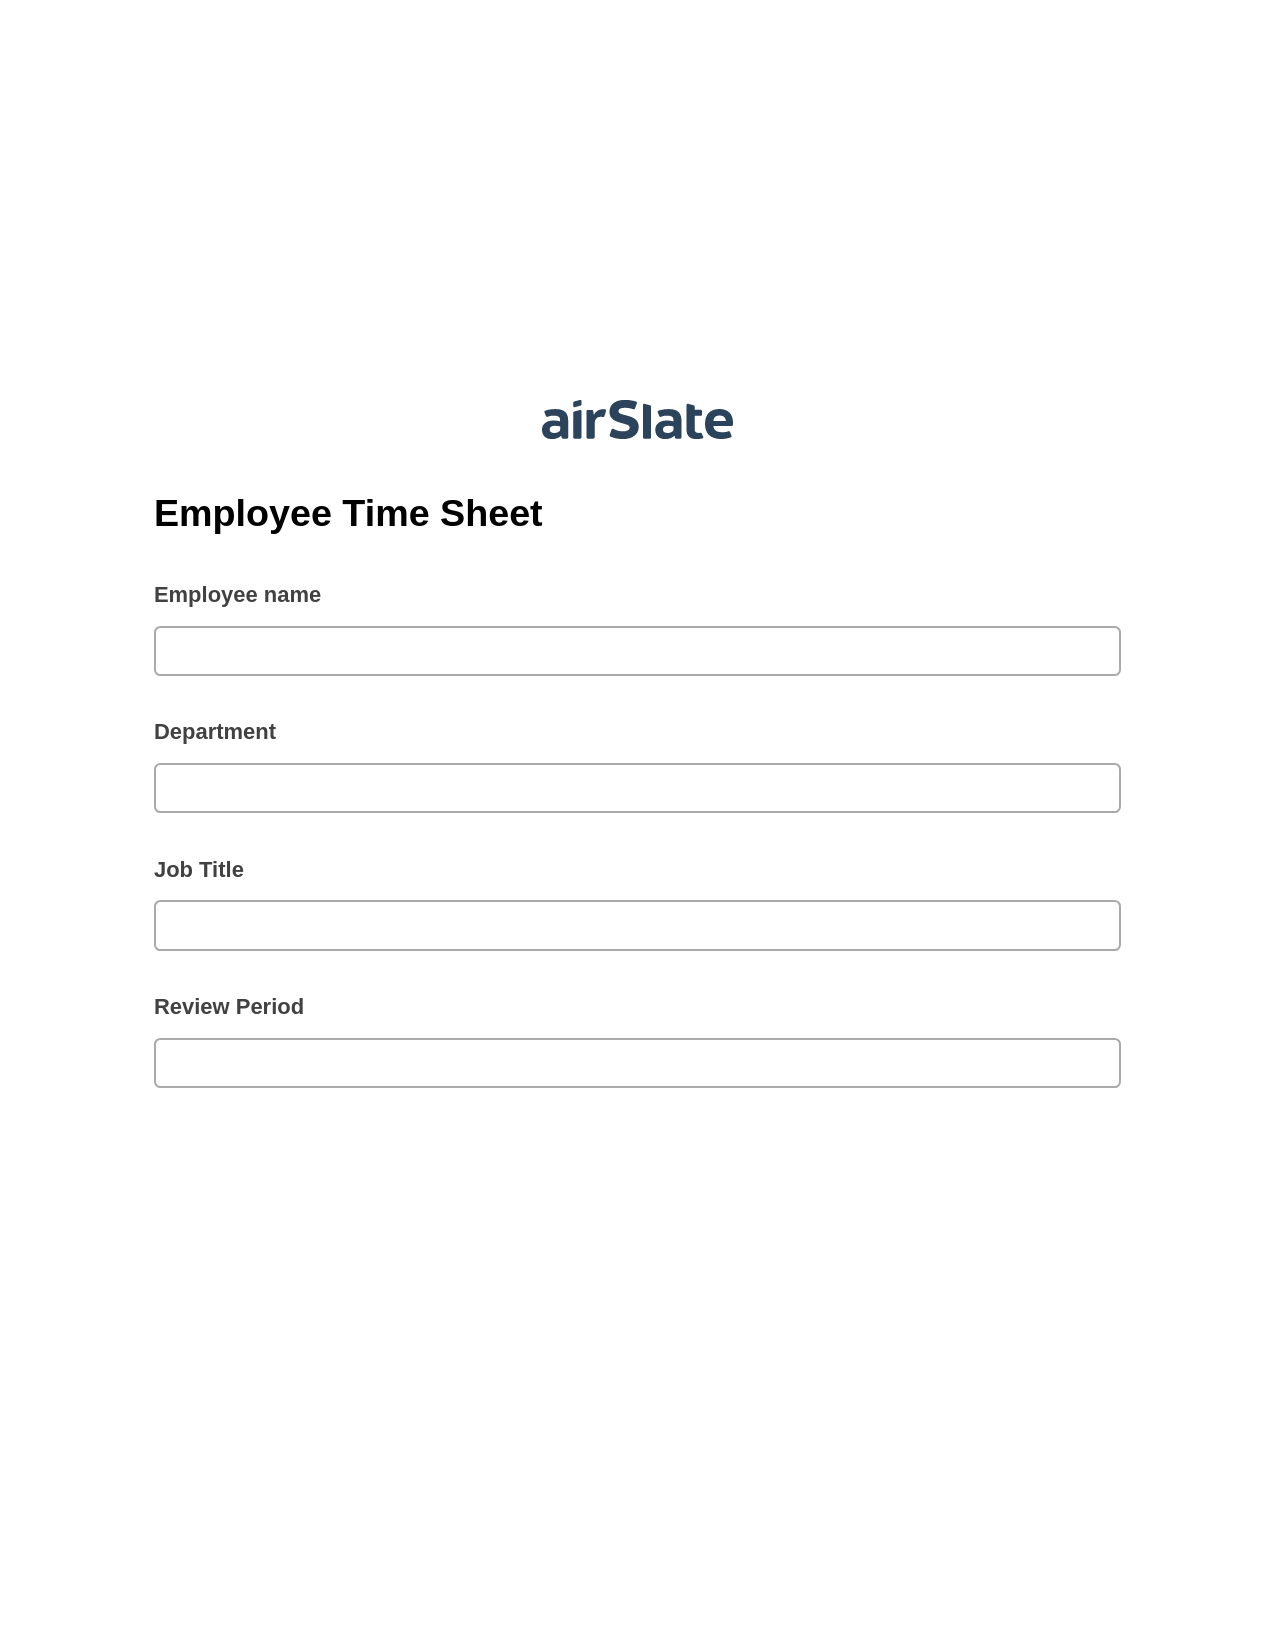 Multirole Employee Time Sheet Pre-fill from Litmos bot, Create slate addon, Archive to Box Bot